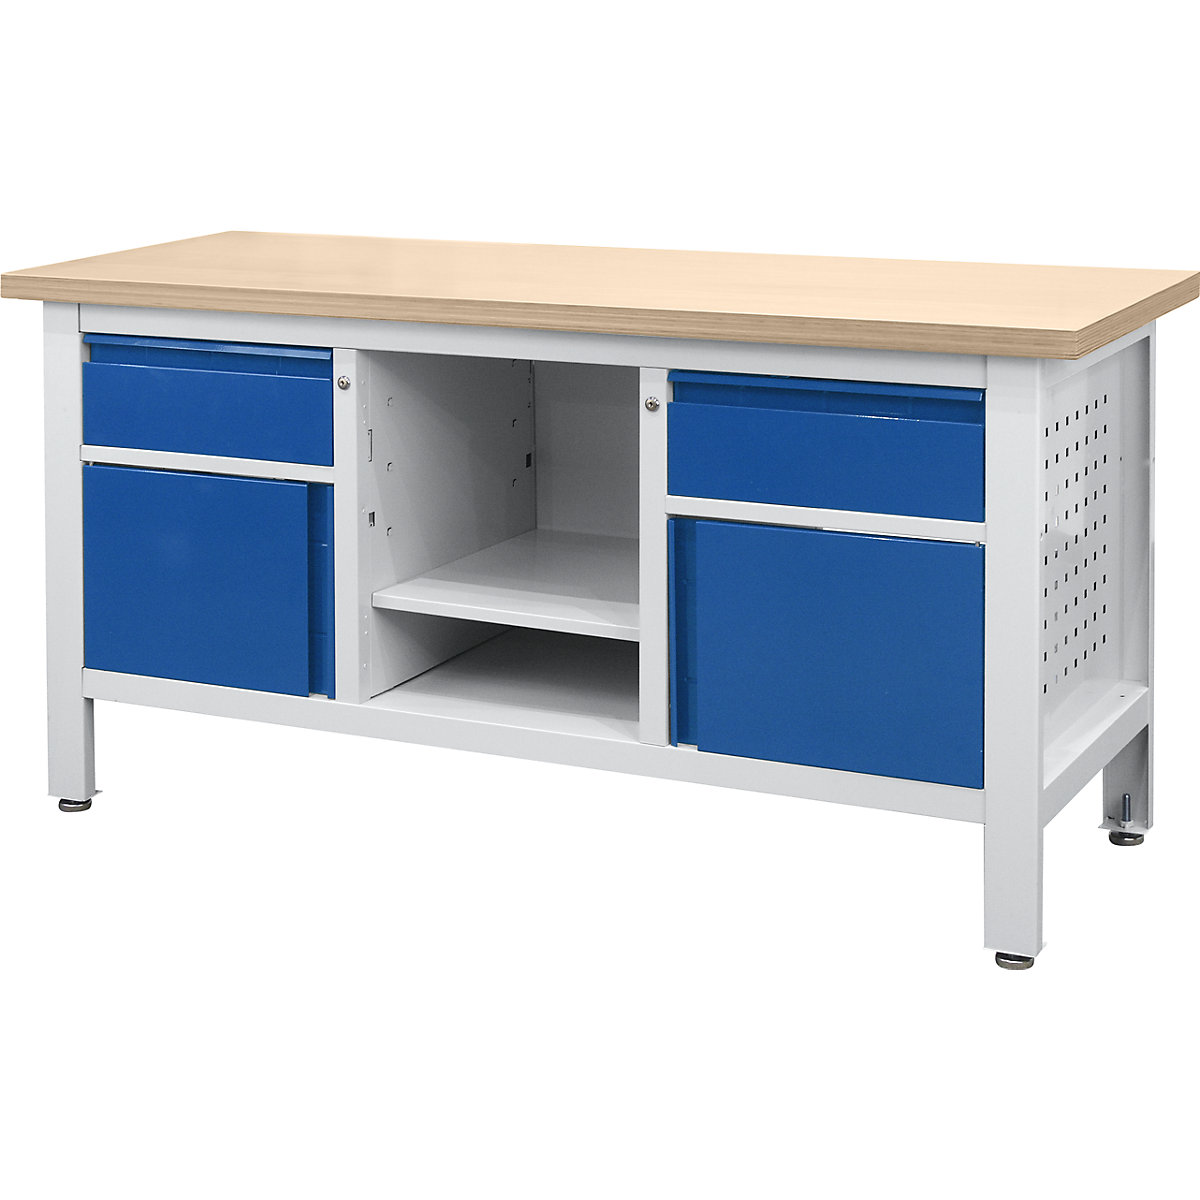 Workbench: 2 drawers, 2 doors, 1 open compartment with shelf | KAISER+KRAFT